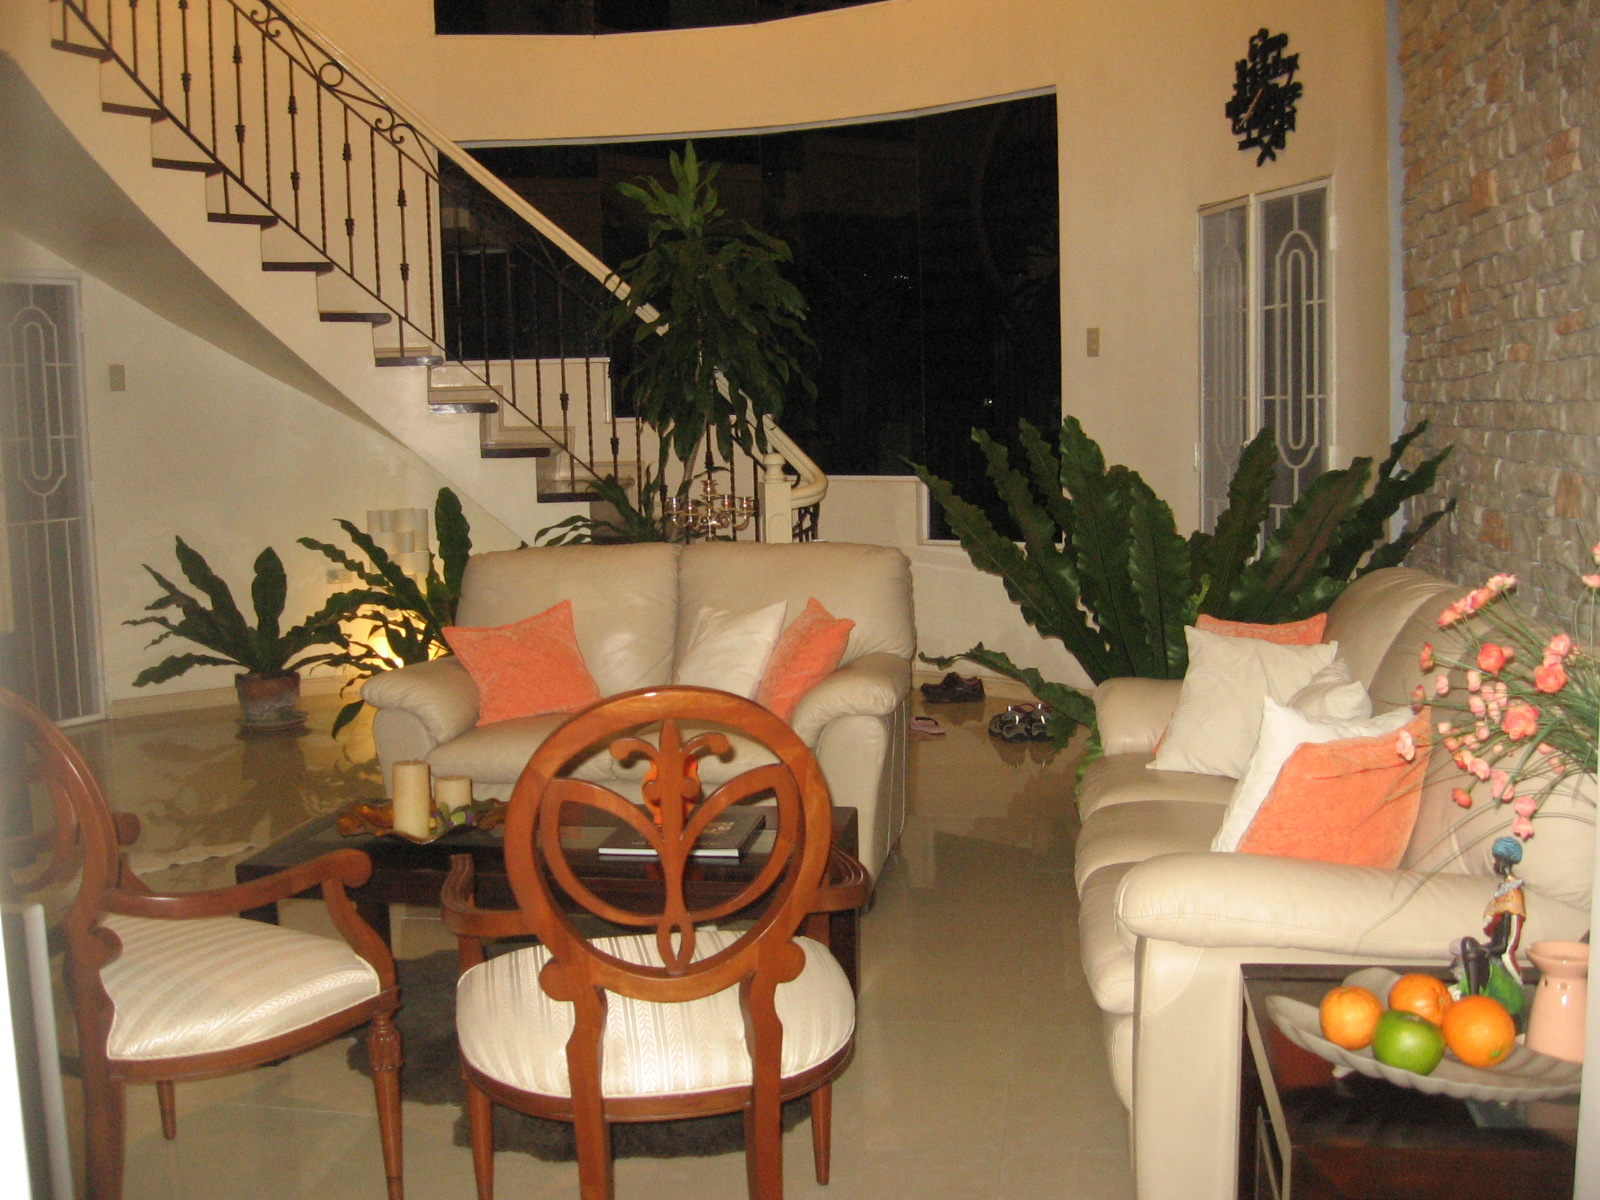 4-bedroom-furnished-house-in-vista-grande-subdivision-talisay-city-cebu